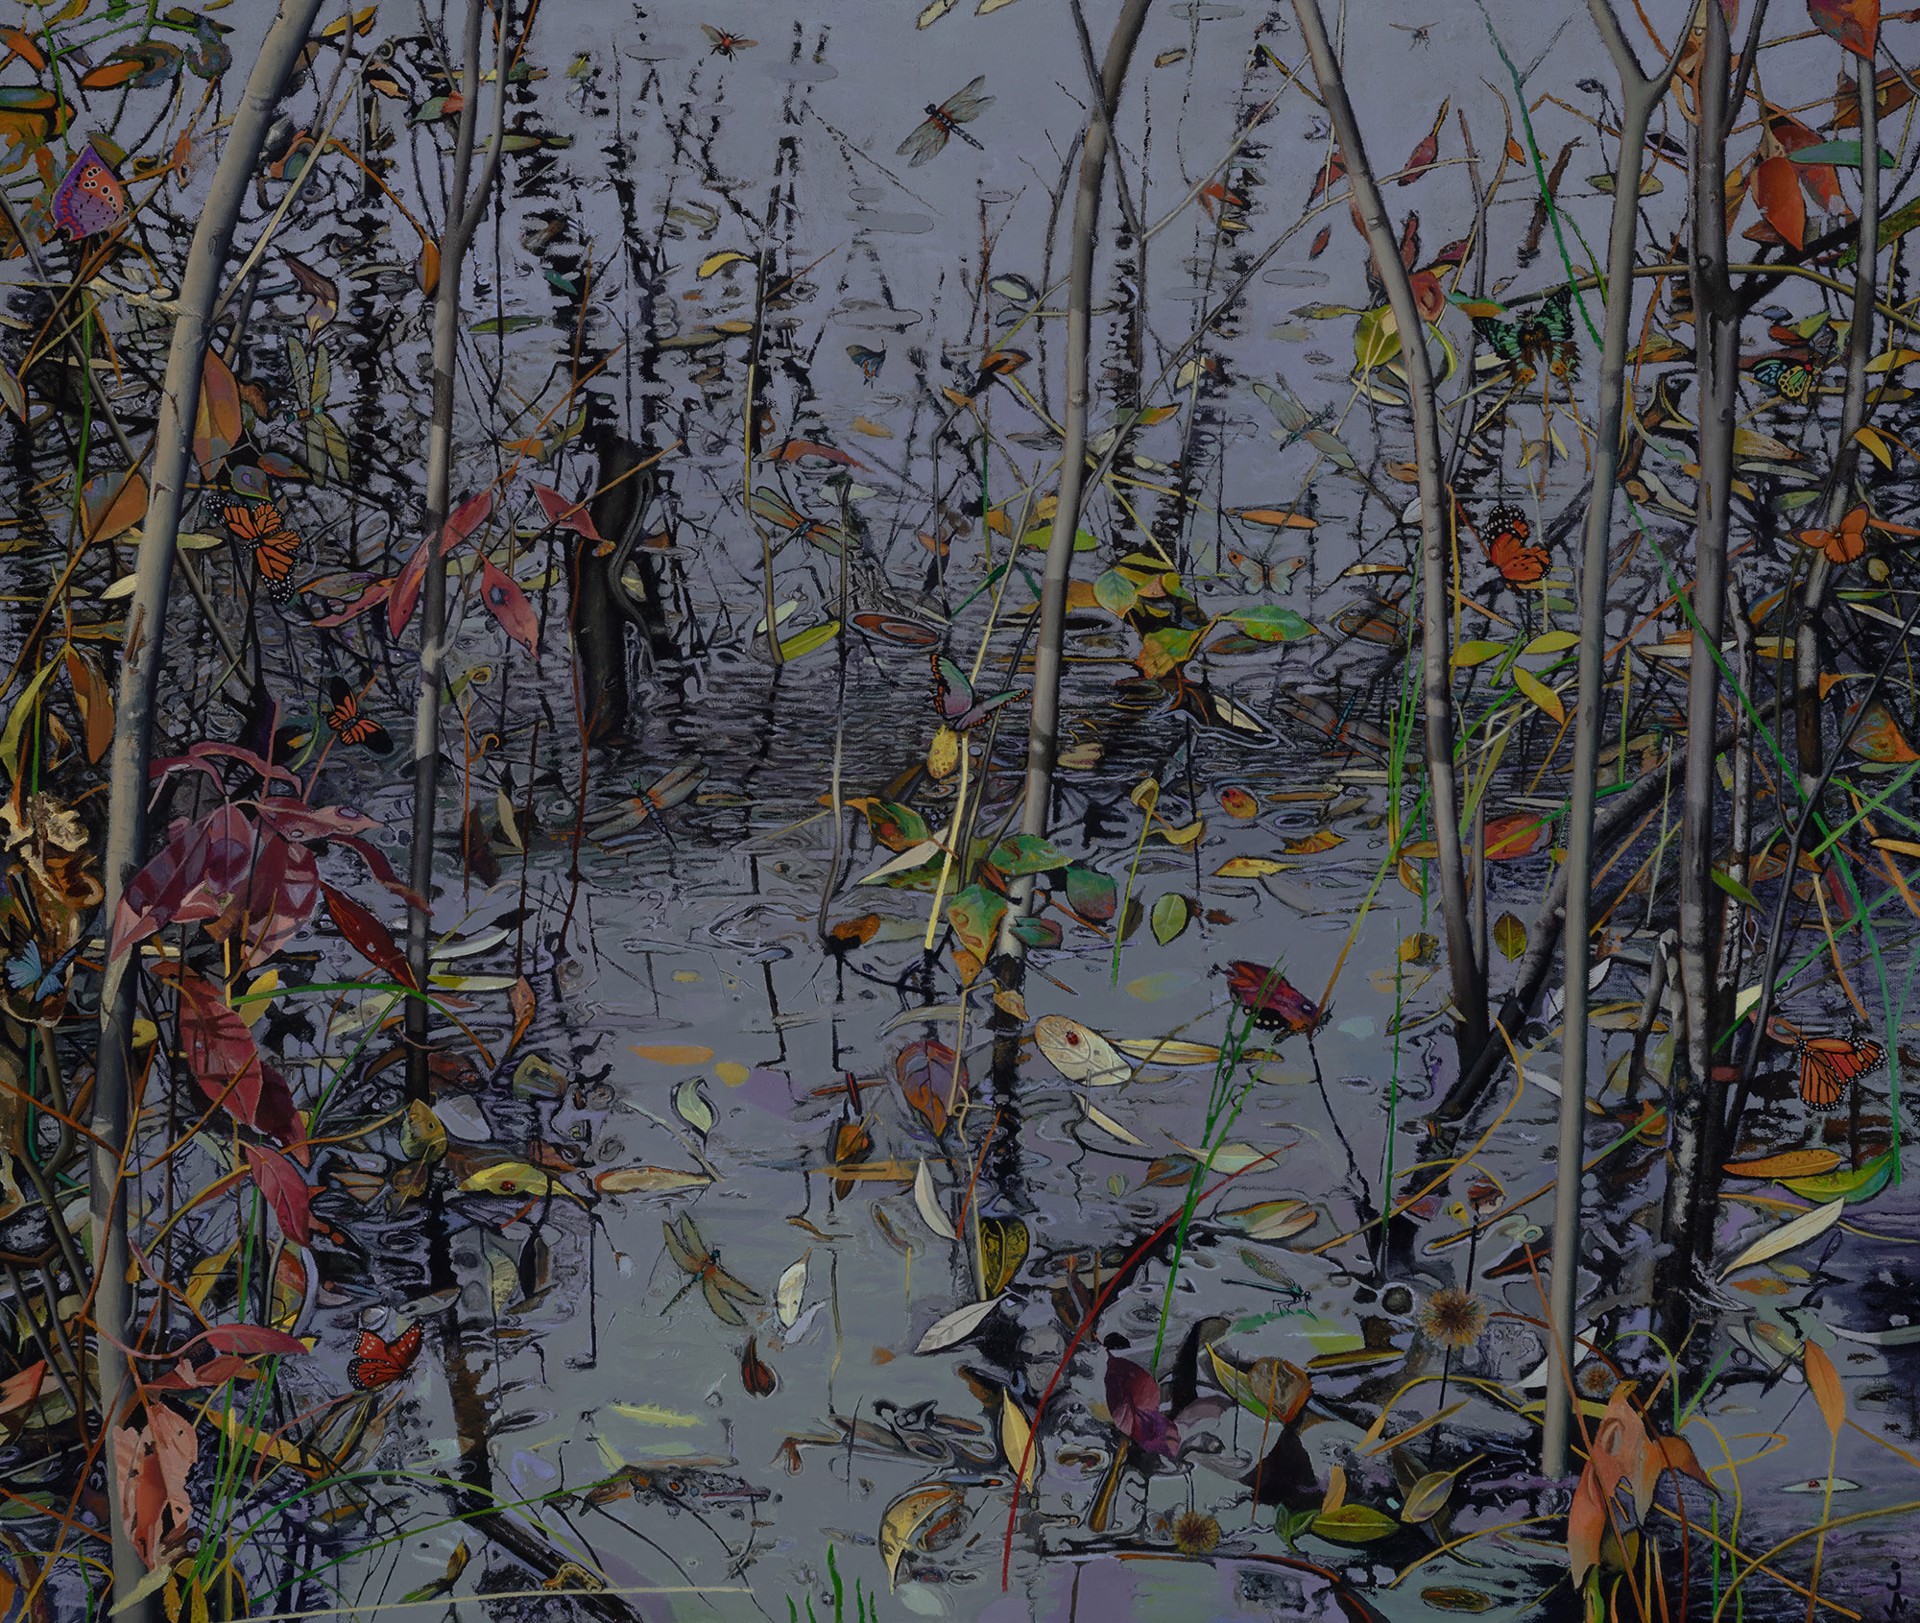 Wetland Carnival by John Waite